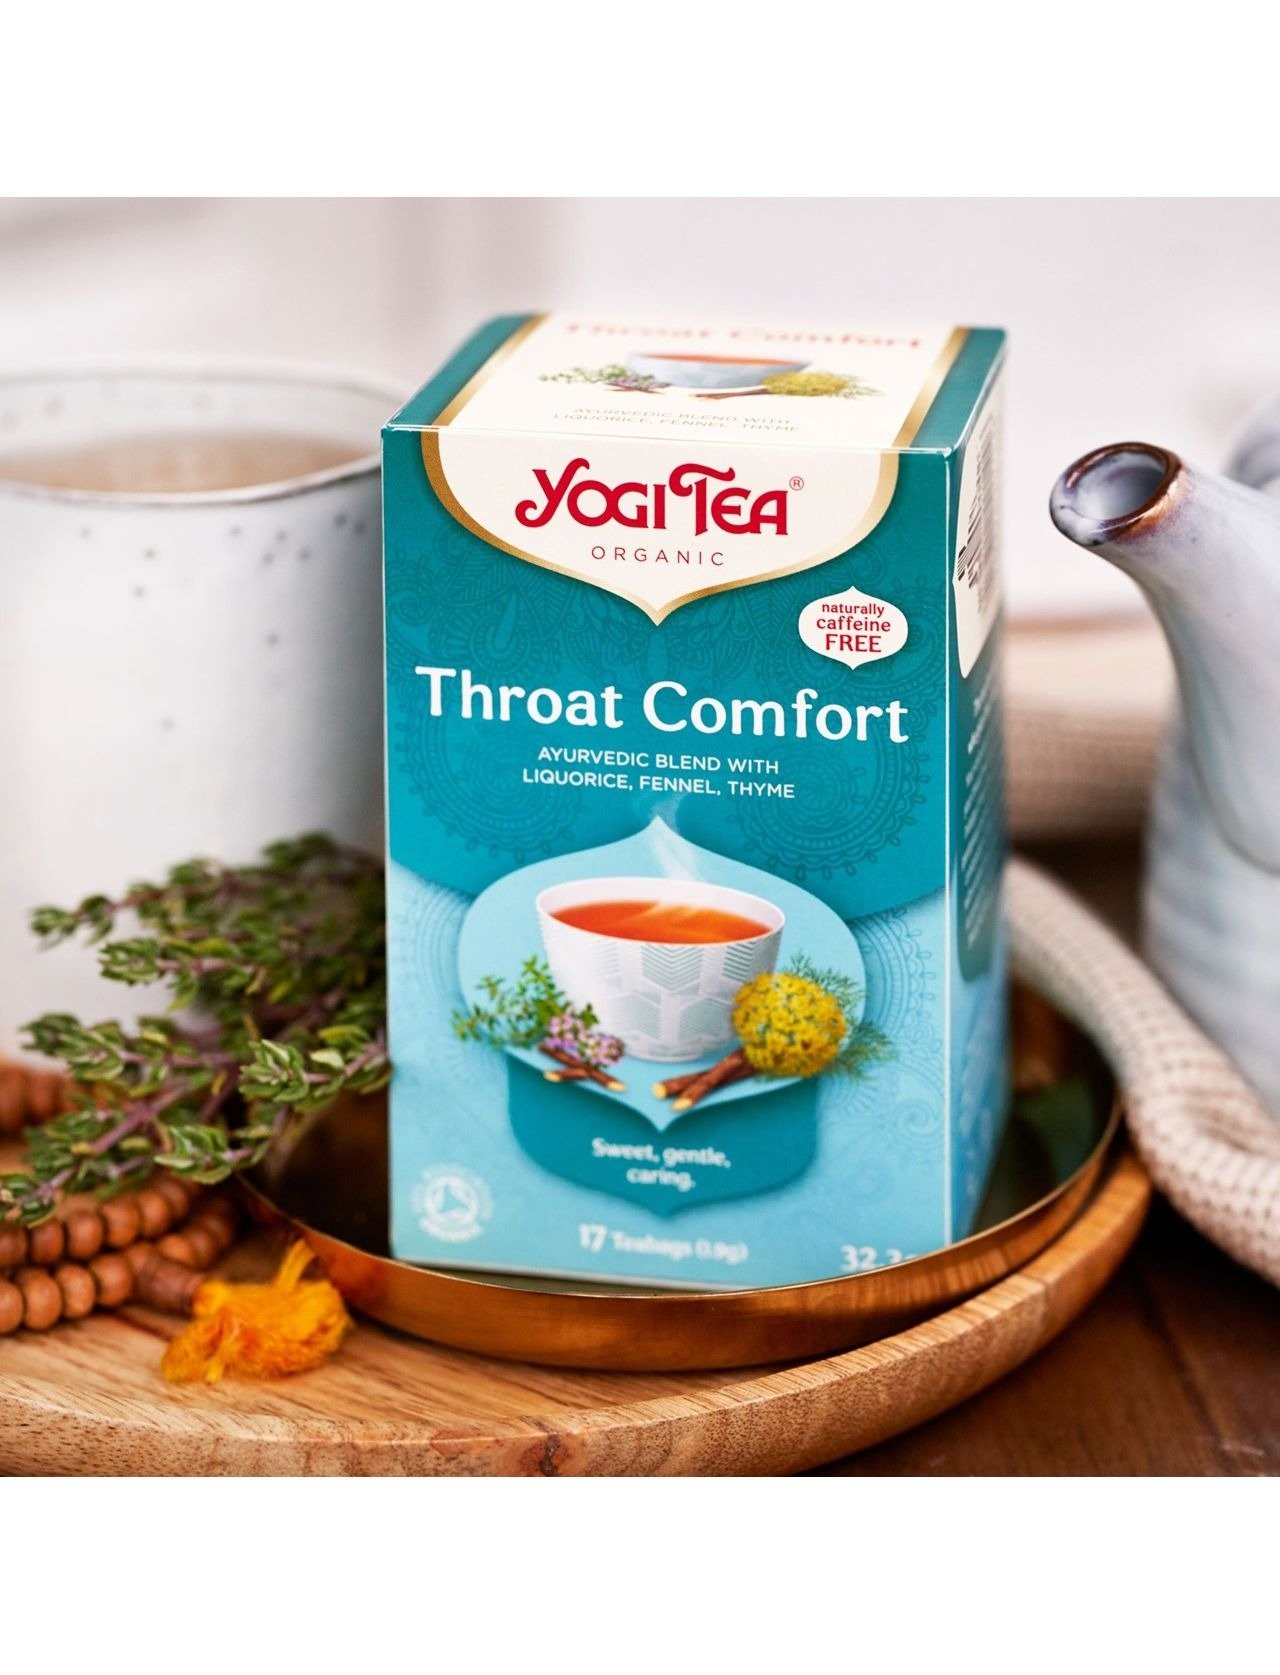 Чай трав'яний Yogi Tea Throat Comfort органічний 32.3 г (17 шт. х 1.9 г) - фото 3